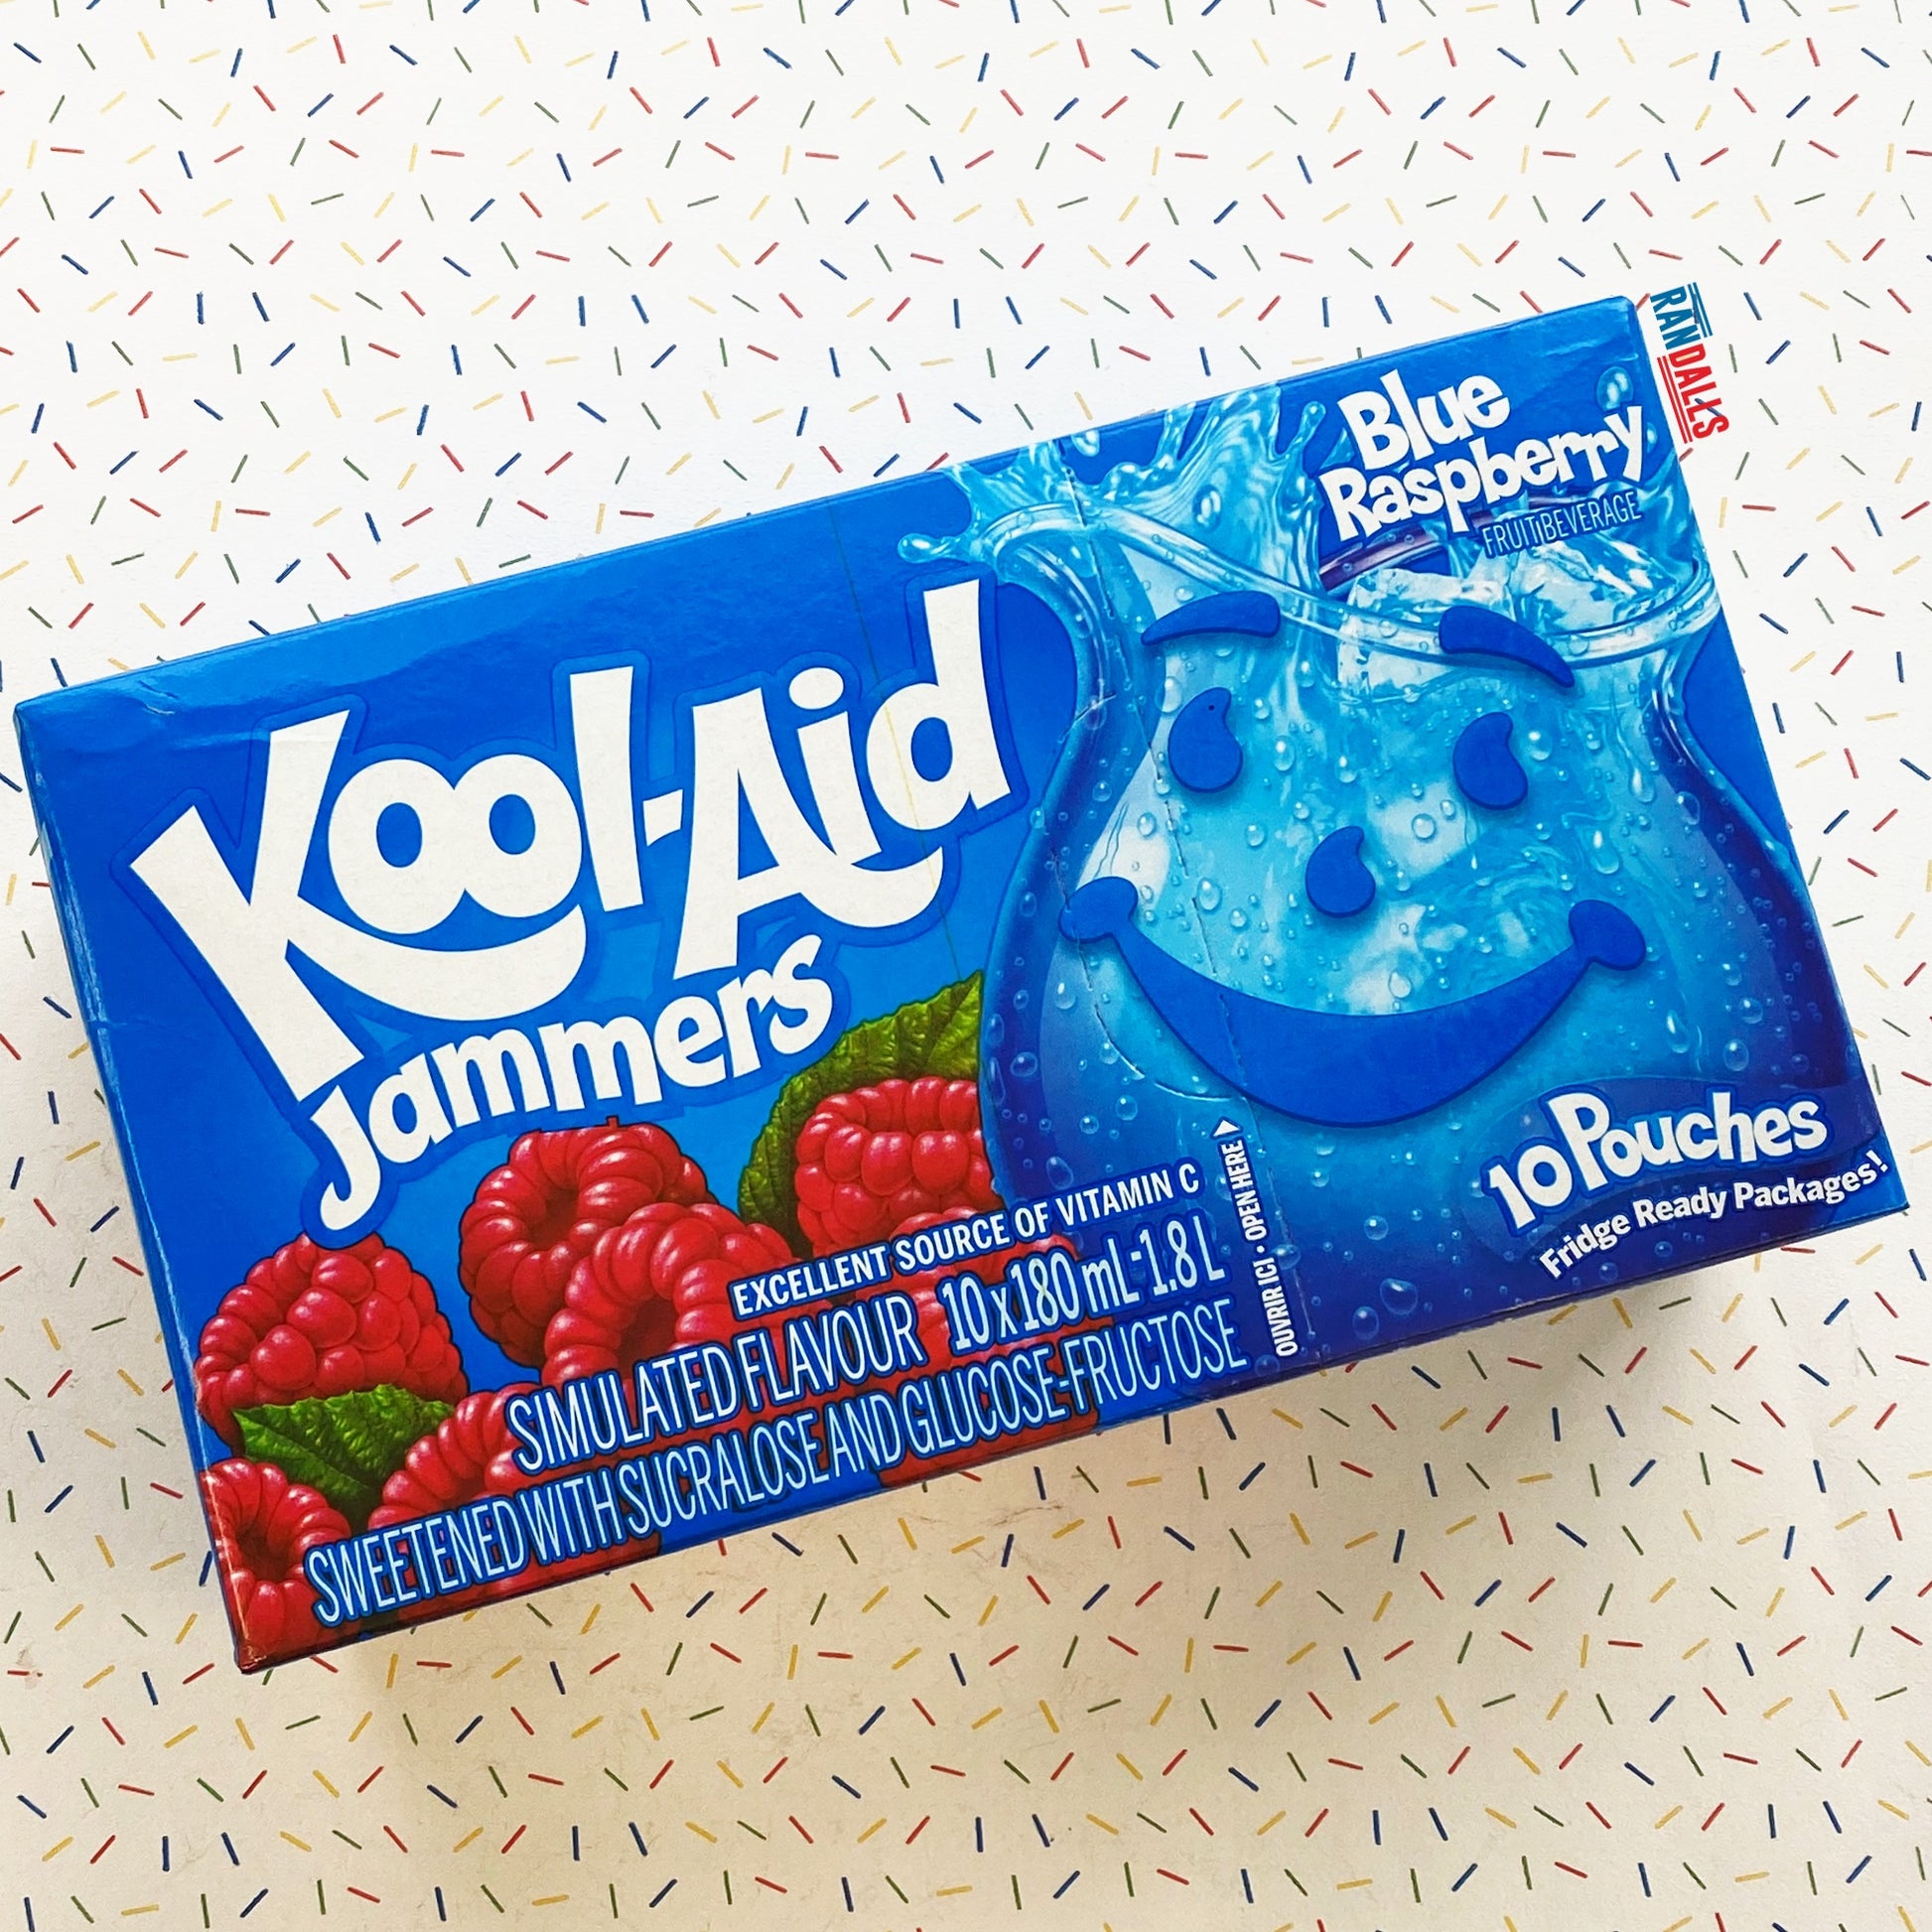 kool-aid jammers pouches box blue raspberry, fruit juice, 10 pouches, soda, pop, usa, randalls